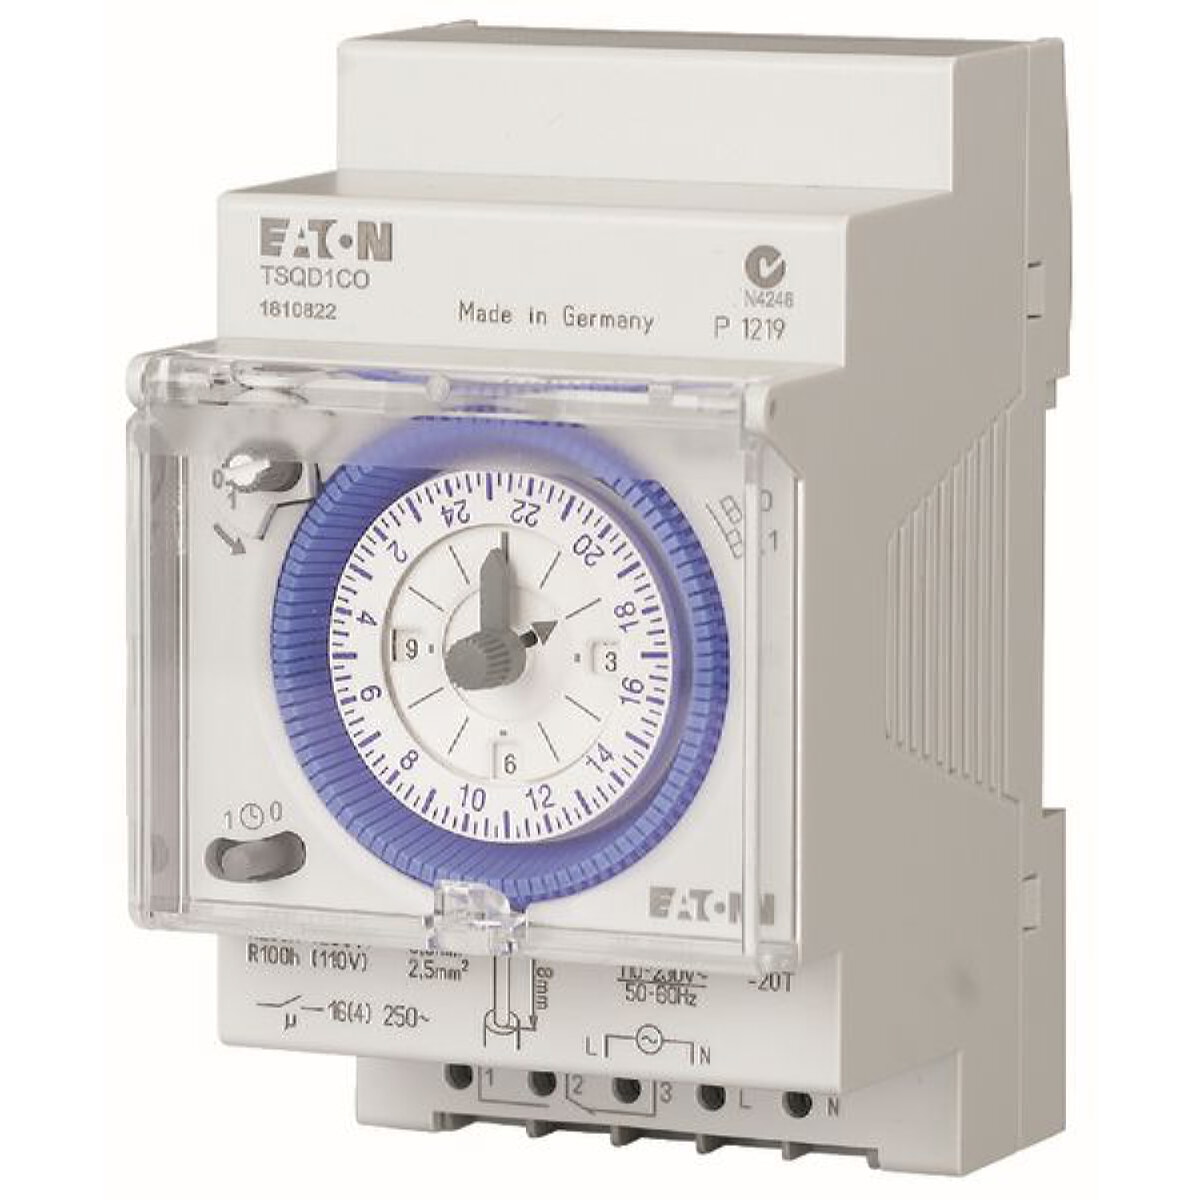 EATON Electric Zeitschaltuhr TSQD1CO